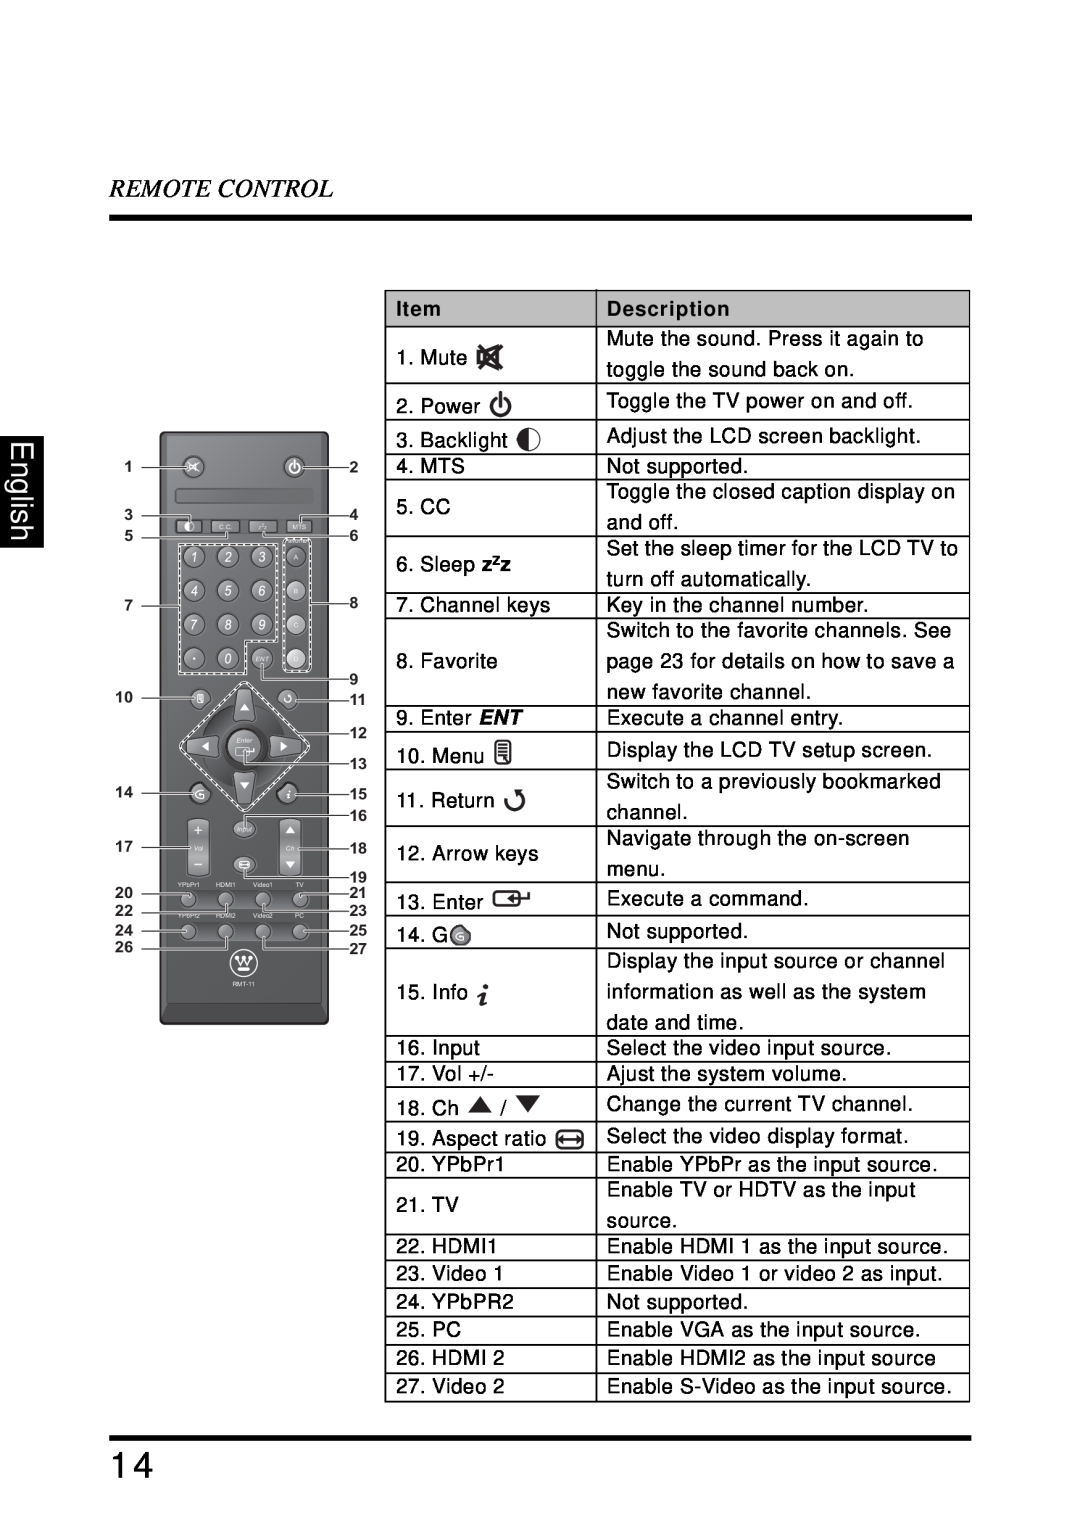 Westinghouse SK-32H640G English, Remote Control, Description, Enter, YPbPr1 HDMI1 Video1 TV YPbPr2 HDMI2 Video2 PC RMT-11 